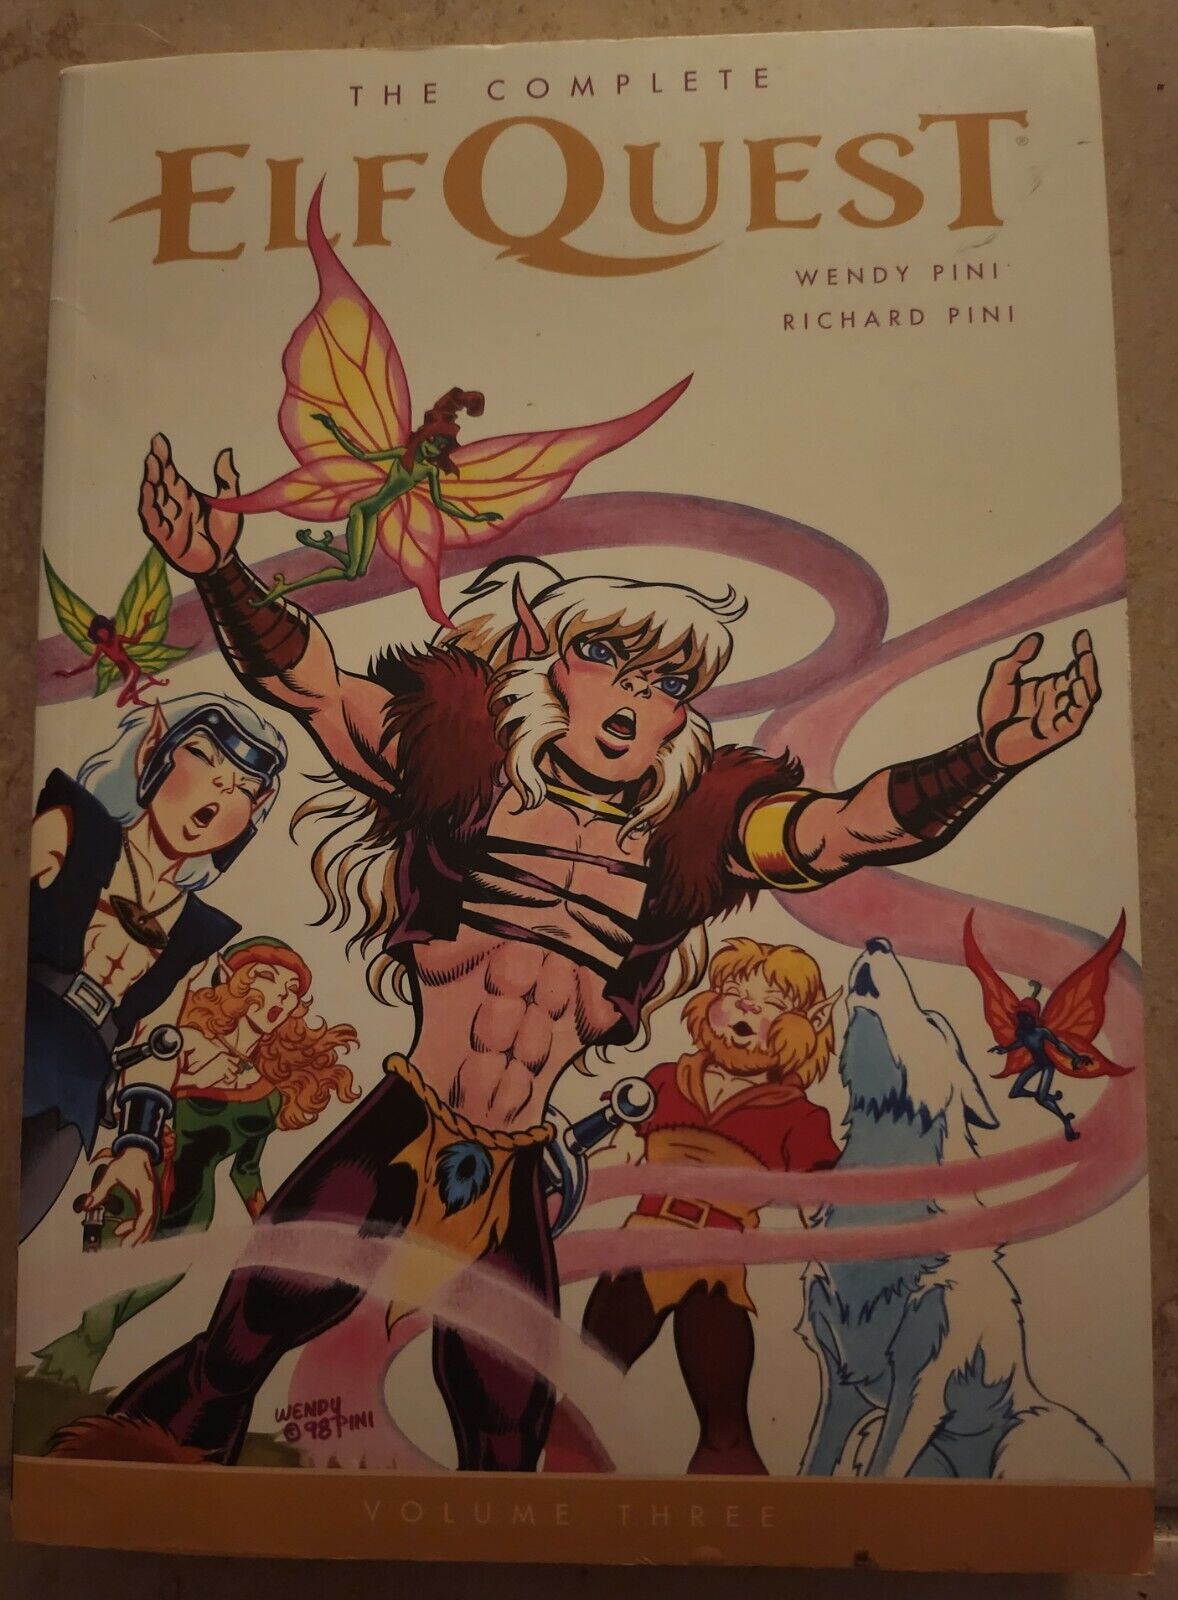 The Complete Elfquest Volume 3